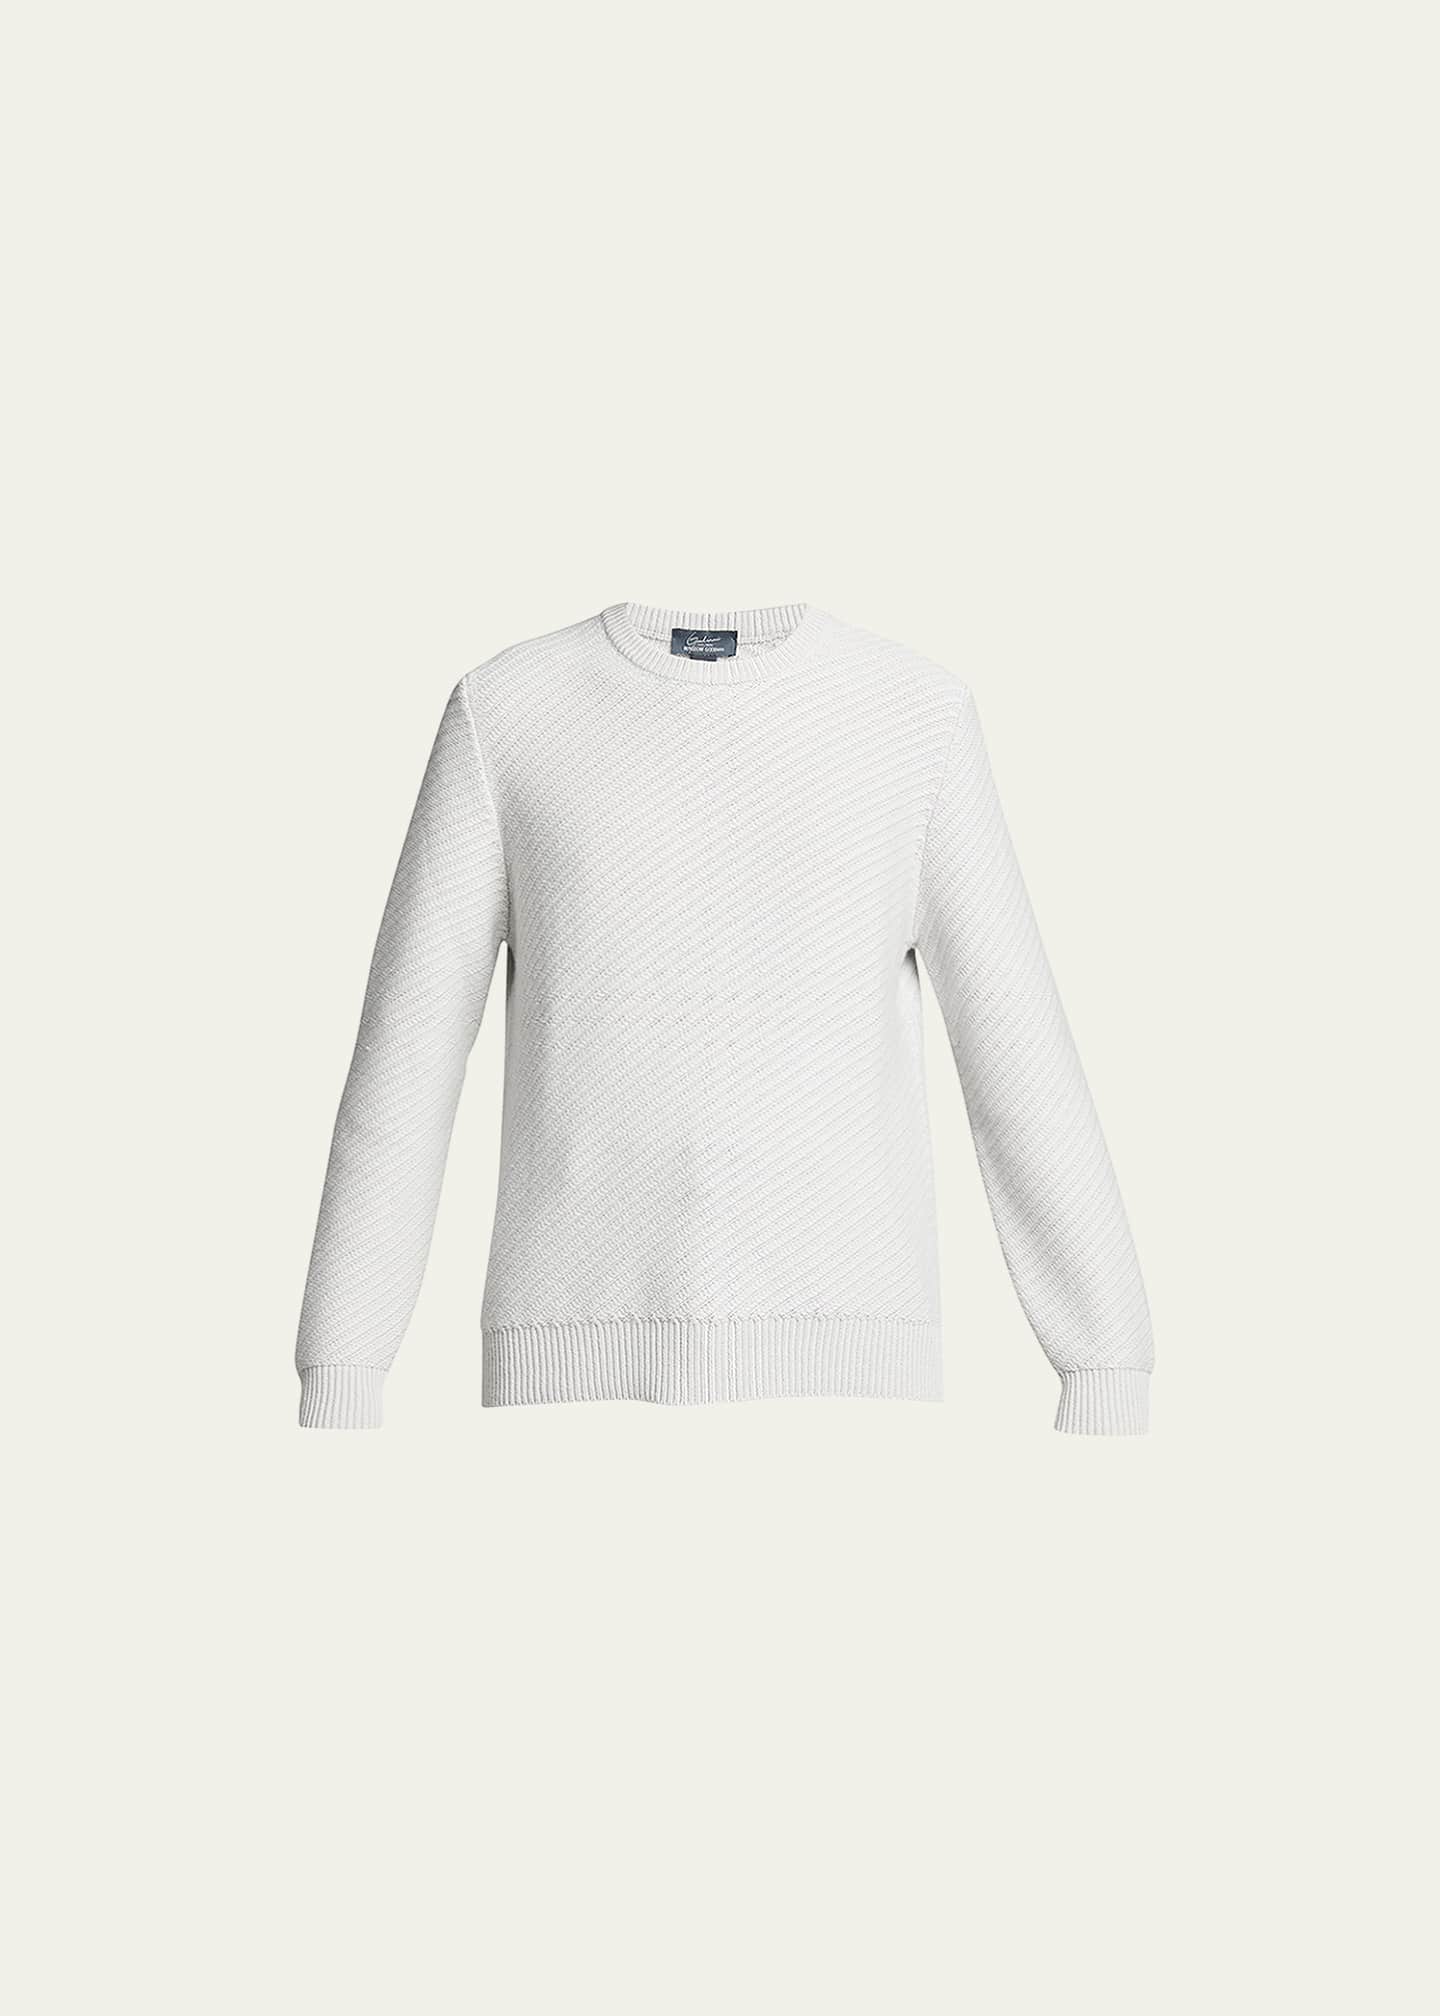 Goodman's Men's Cashmere Diagonal Stitch Sweater - Bergdorf Goodman